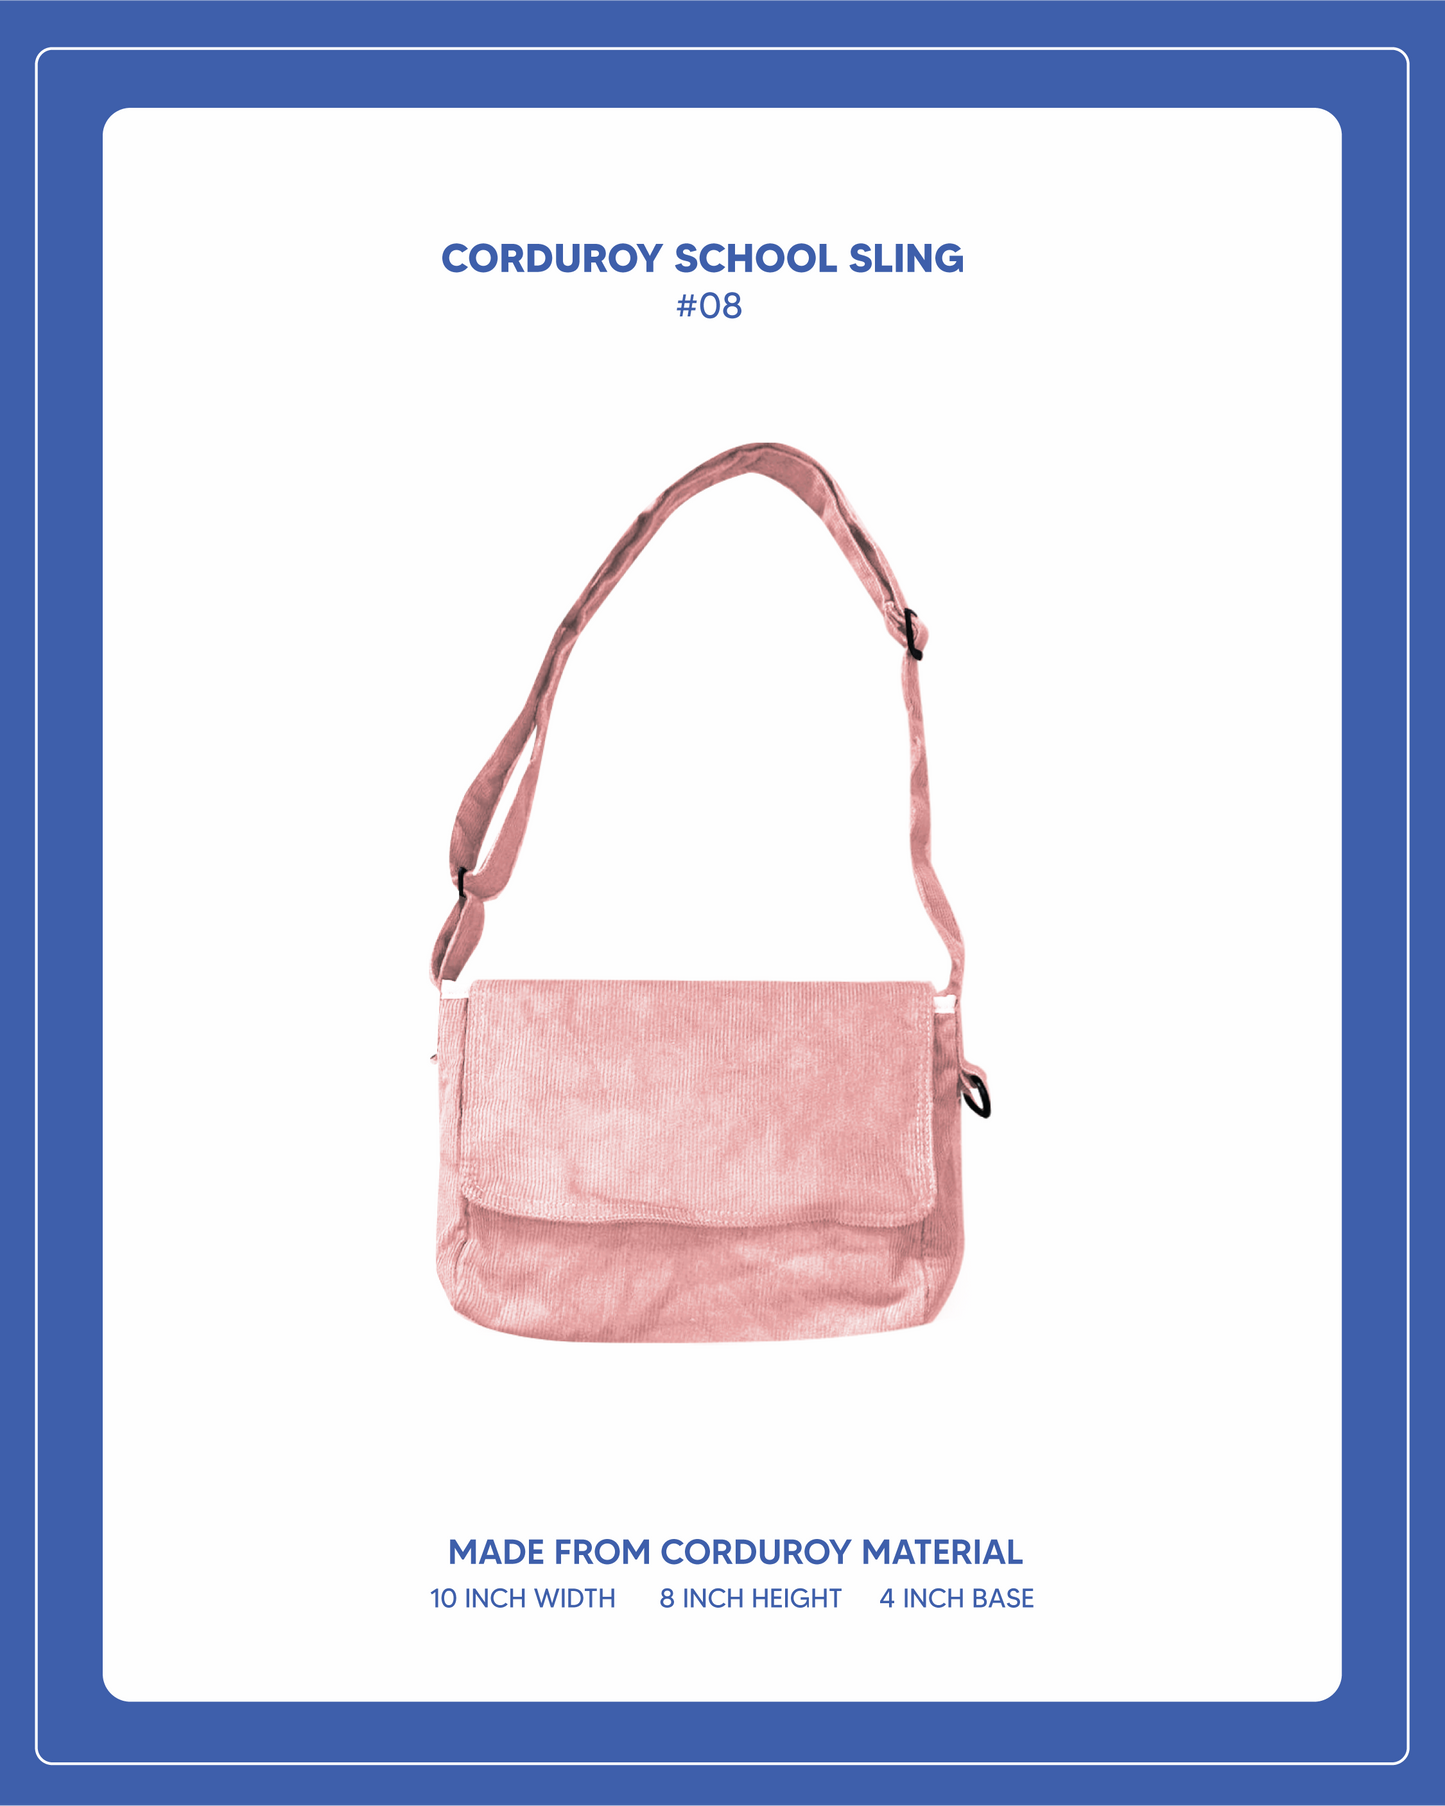 Corduroy Series - Mini/School Sling #08